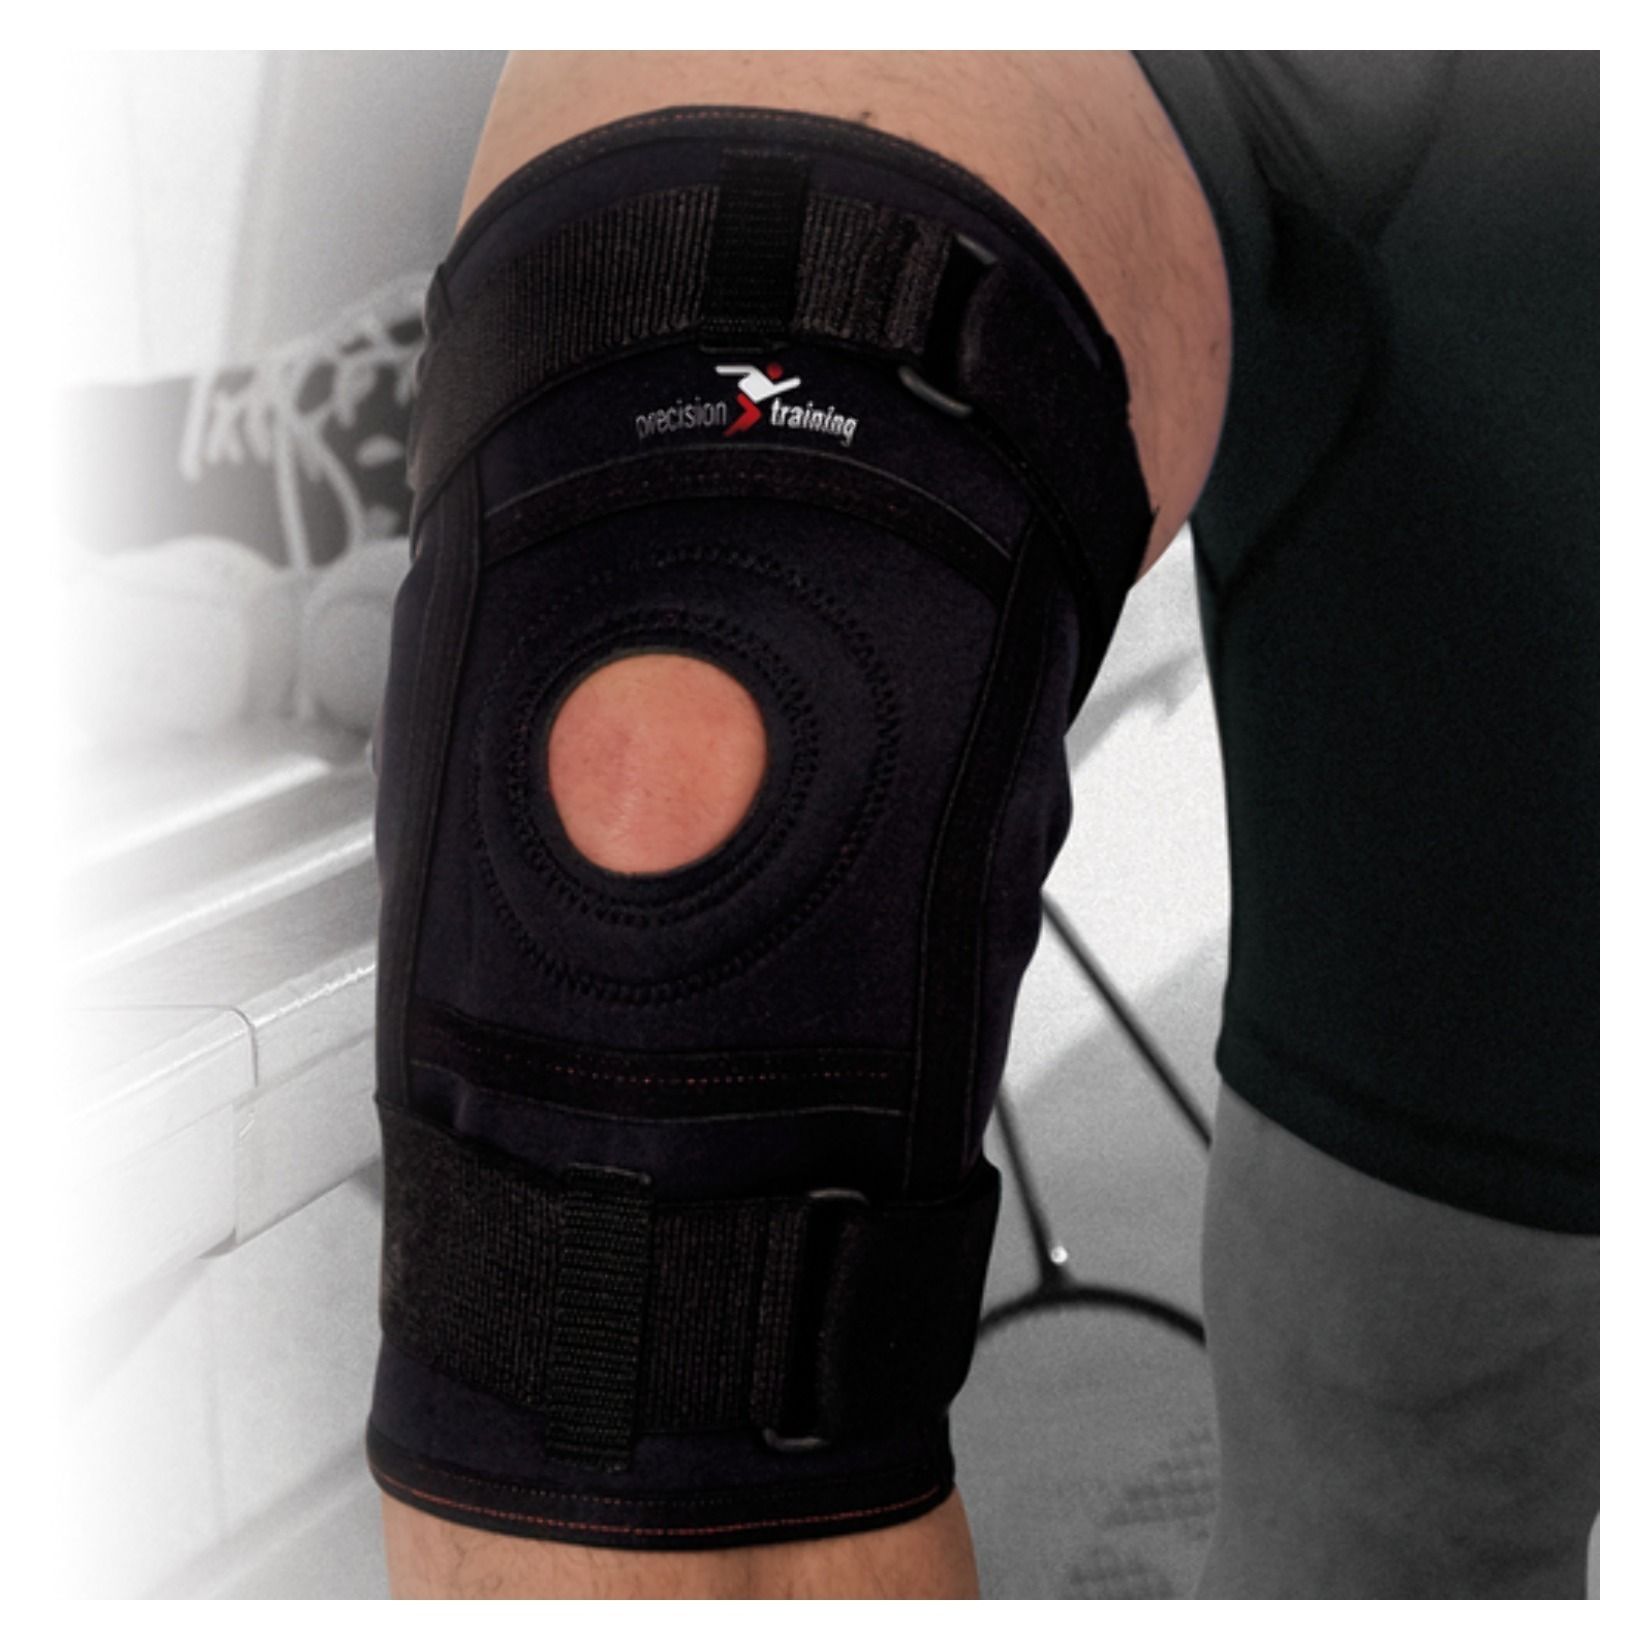 Precision Neoprene Hinged Knee Support